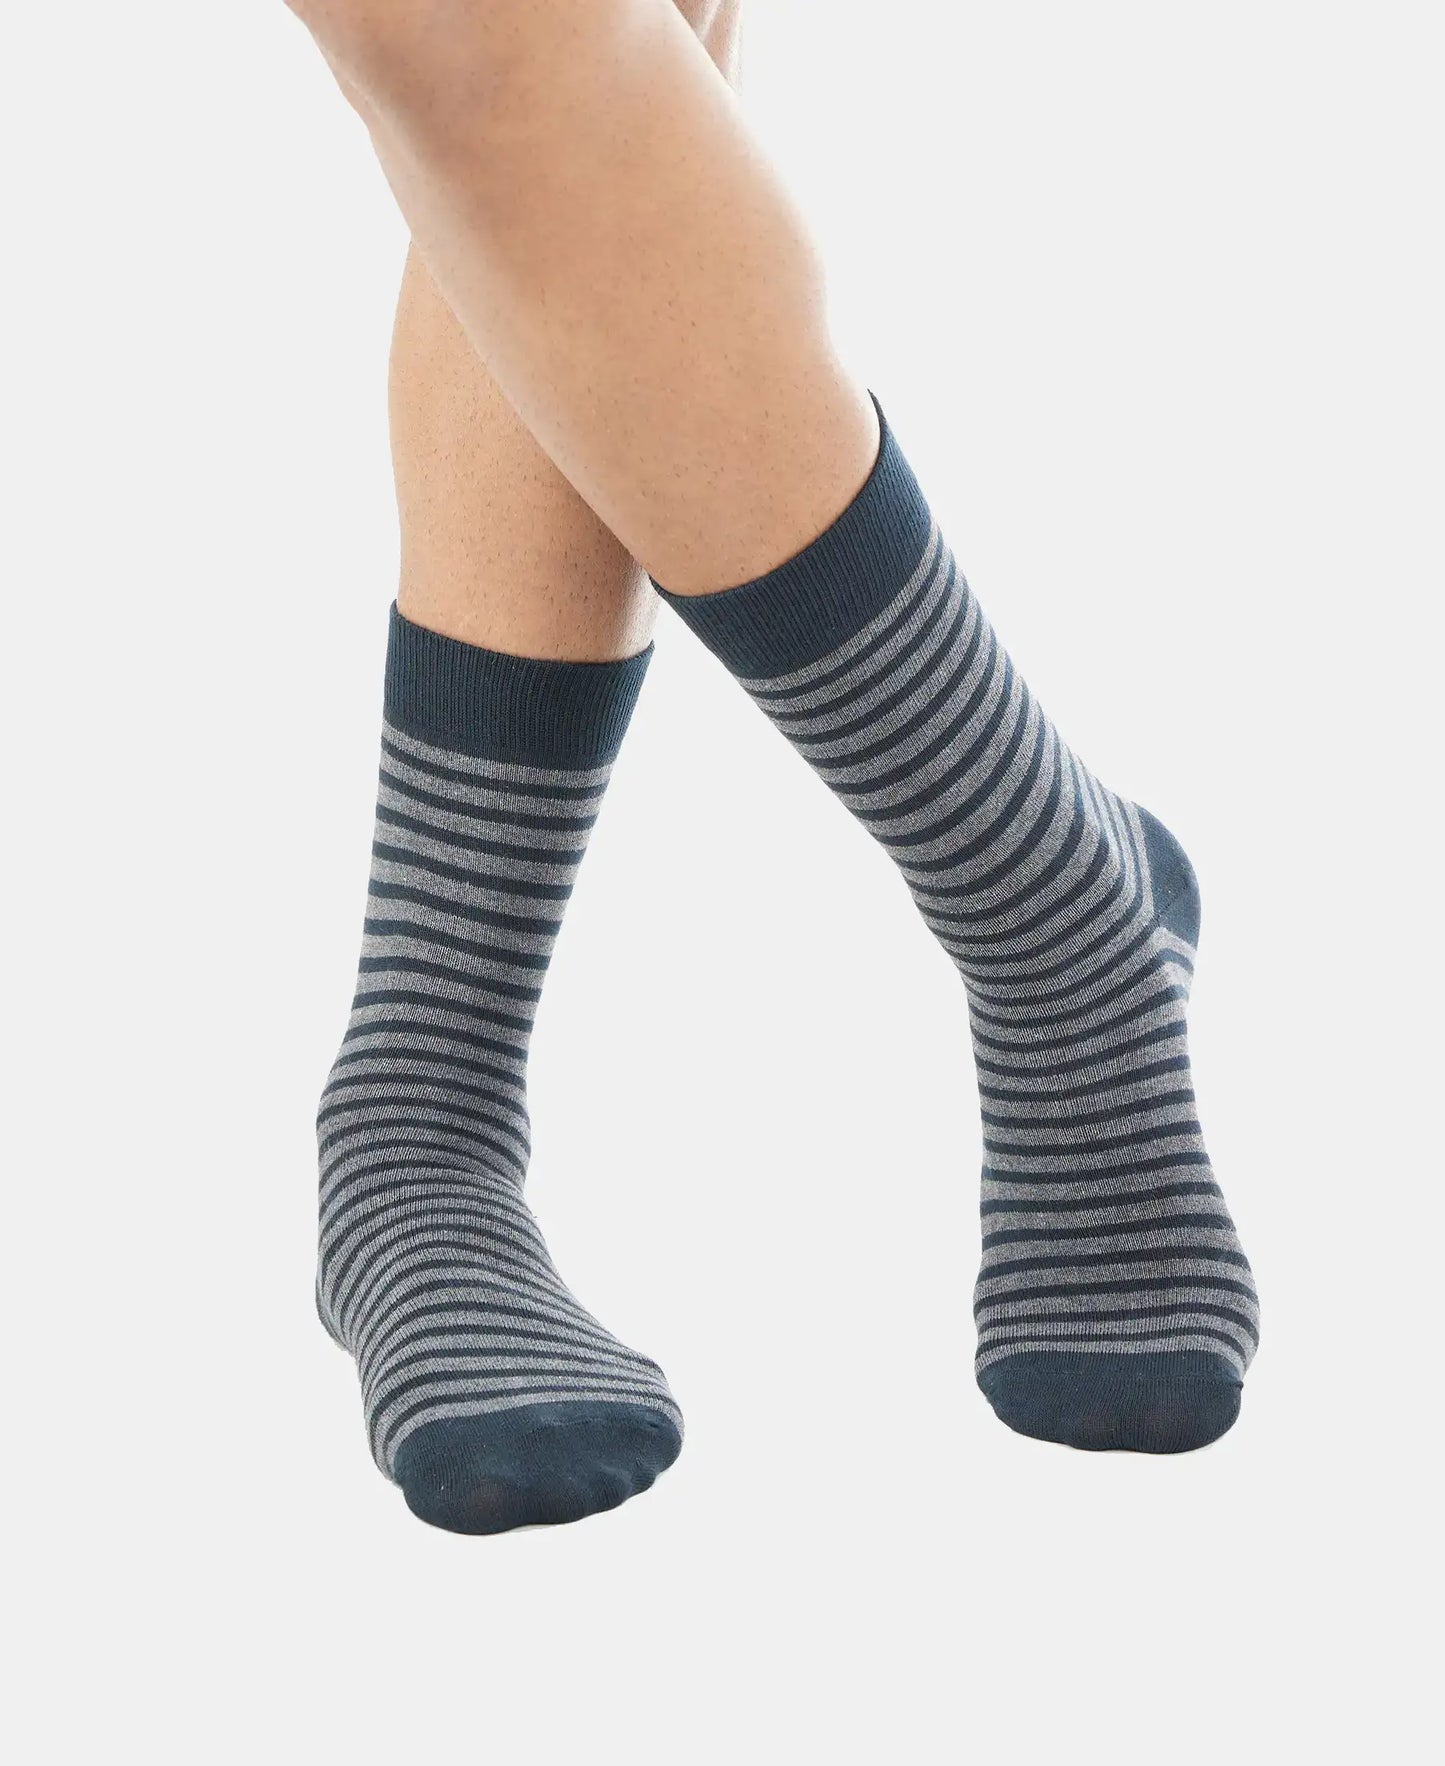 Compact Cotton Elastane Stretch Crew Length Socks With StayFresh Treatment - Black